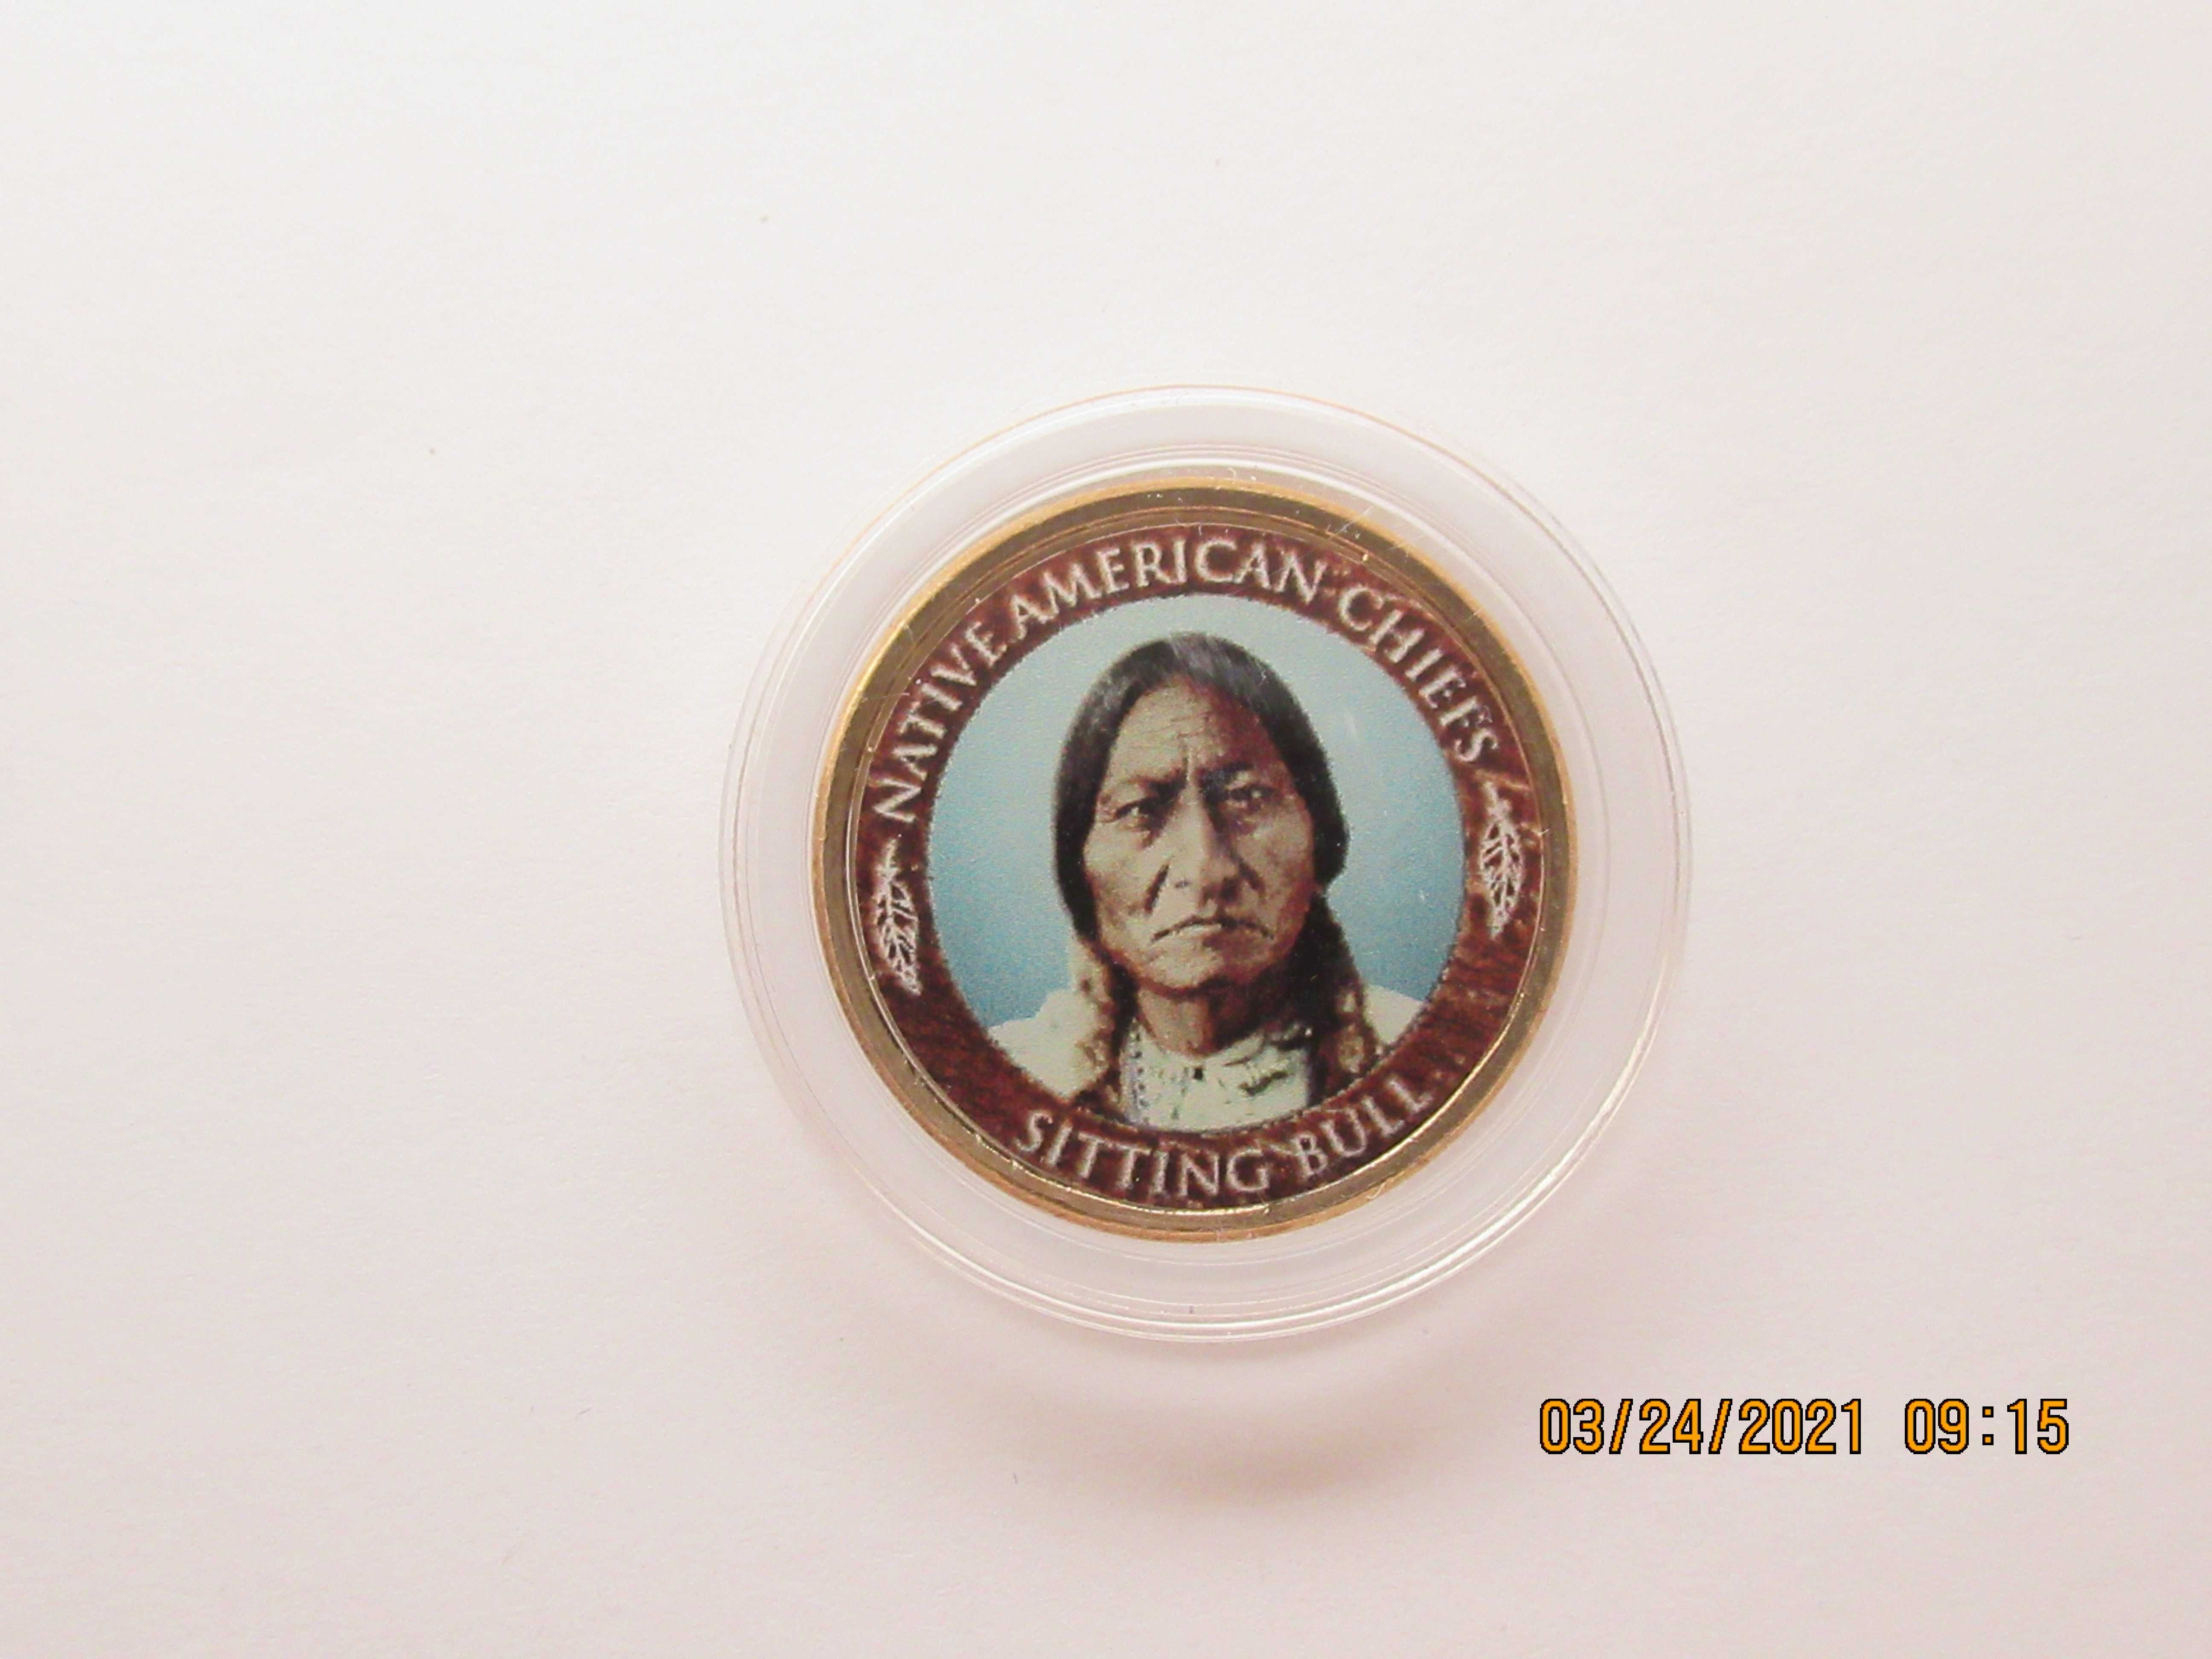 1 dolar Sacagawea Sitting Bull 2010